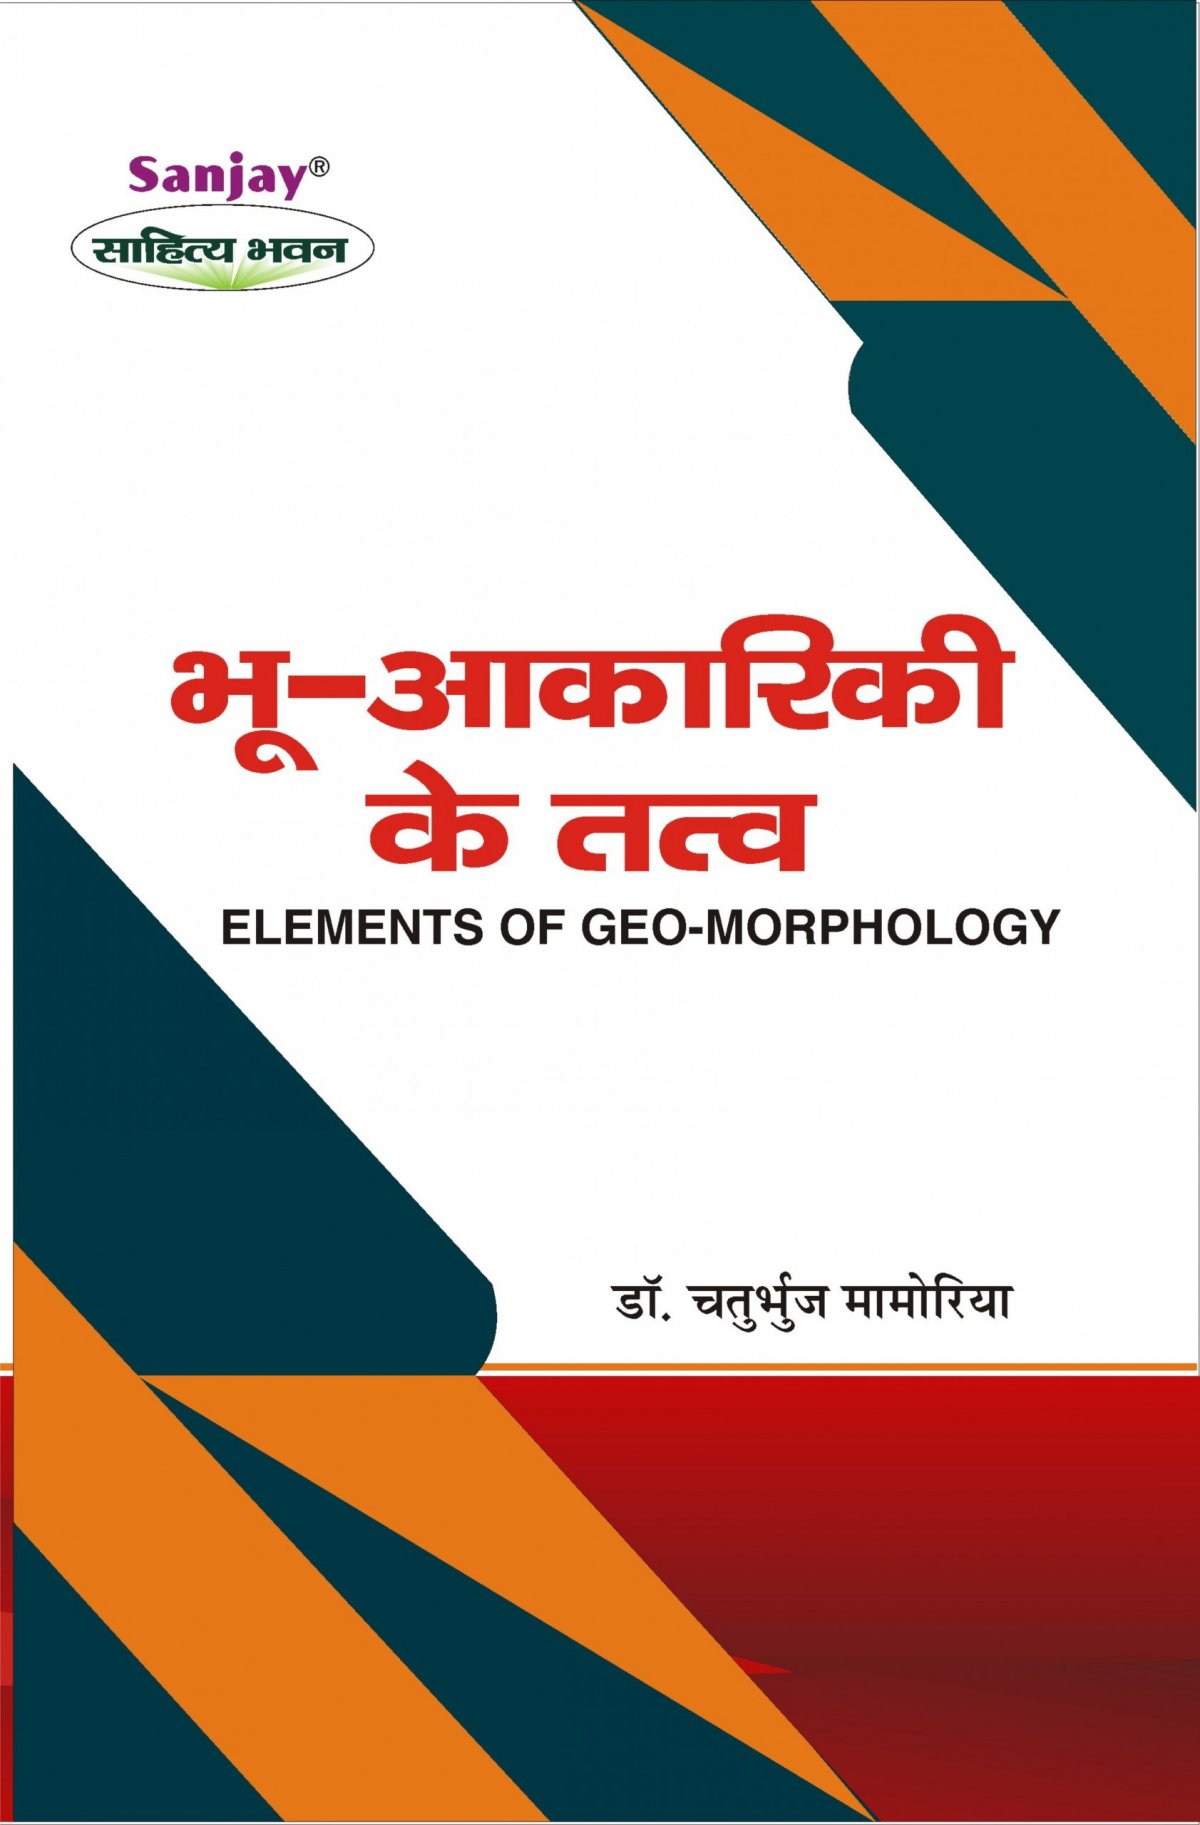 Elements of Geo-Morphology